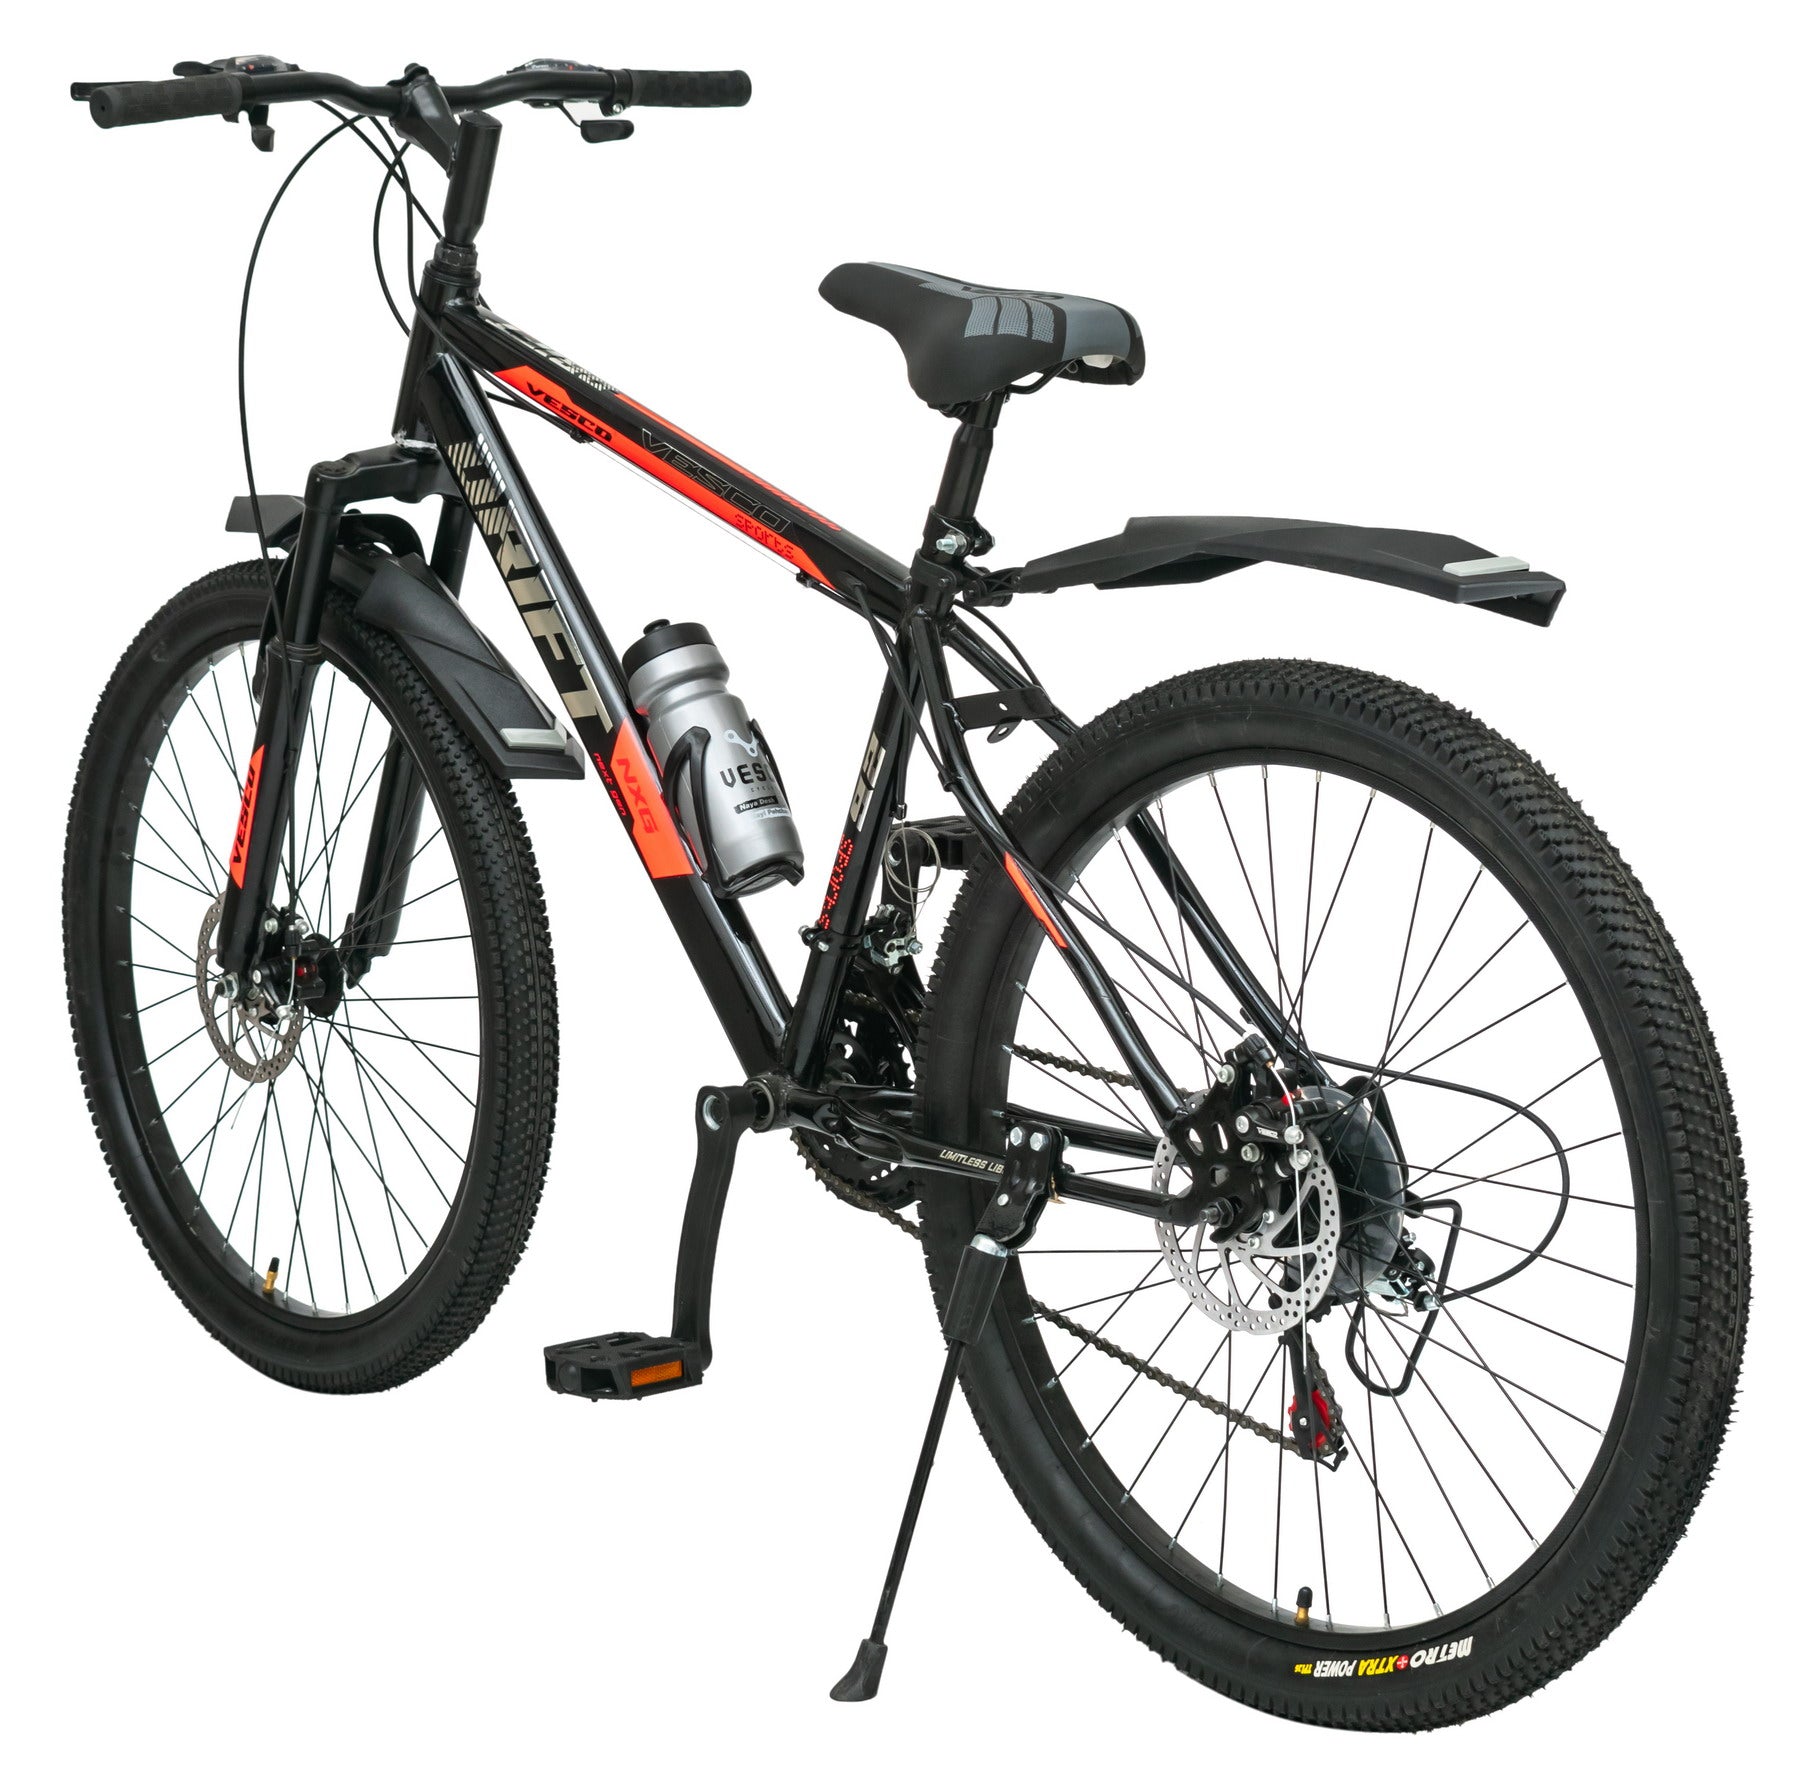 VESCO Drift NXG 26-T with Shimano Gear MTB Mountain Bicycle/Bike 21 Speed Gear Cycle